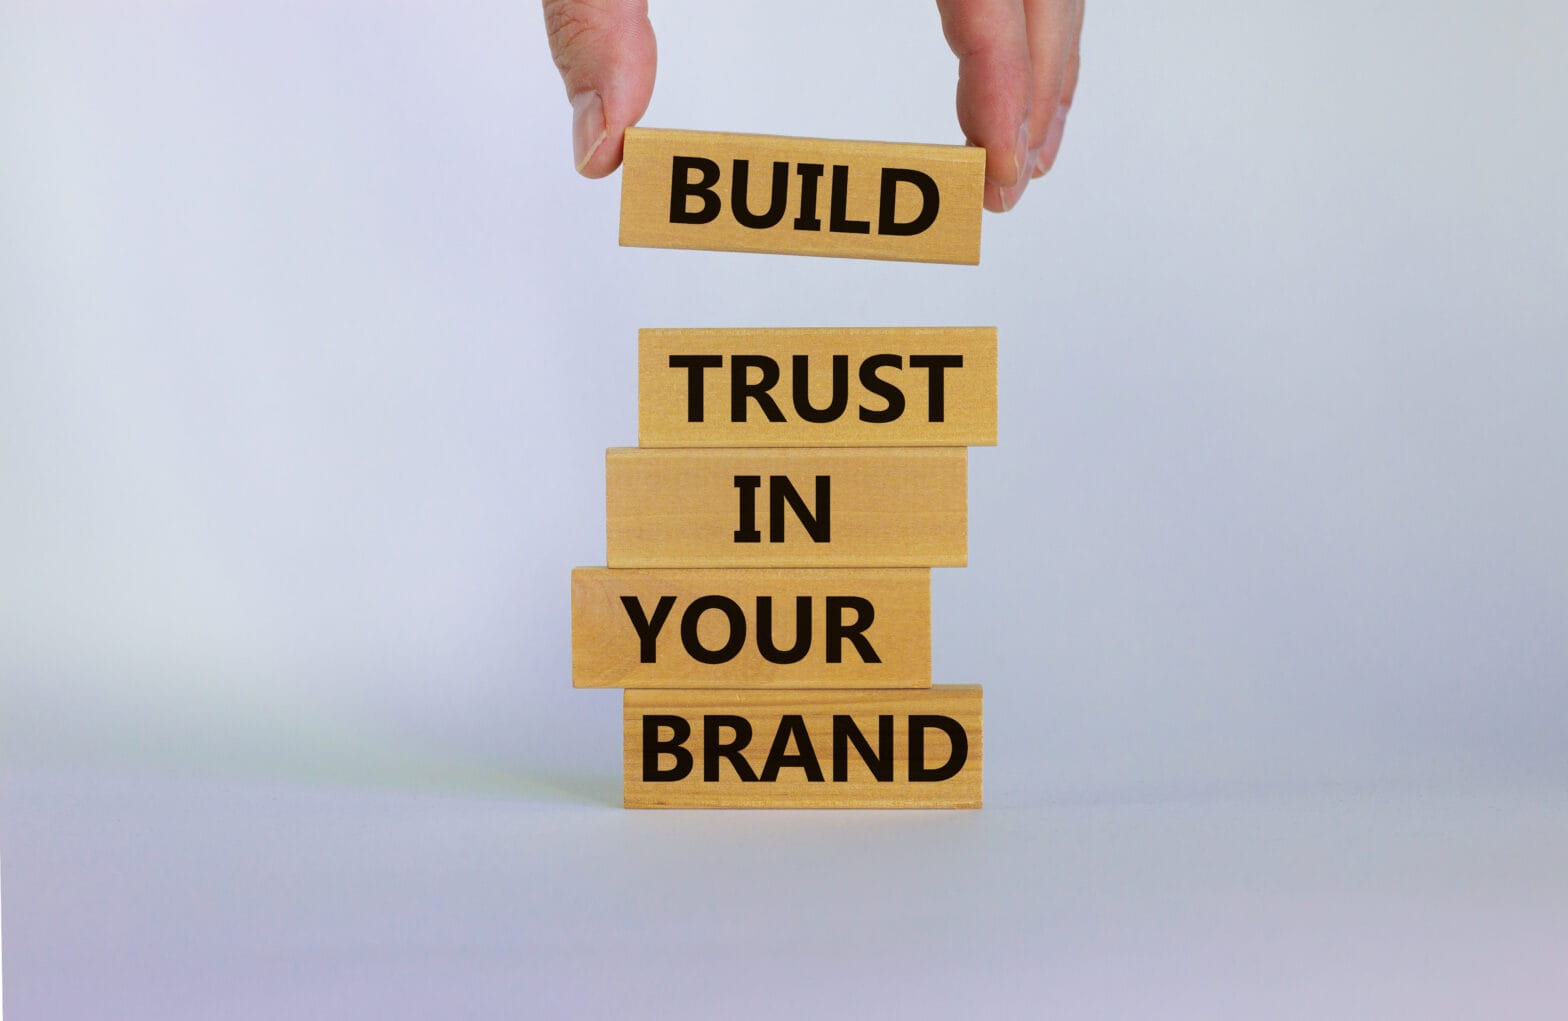 Rebuild trust in your brand